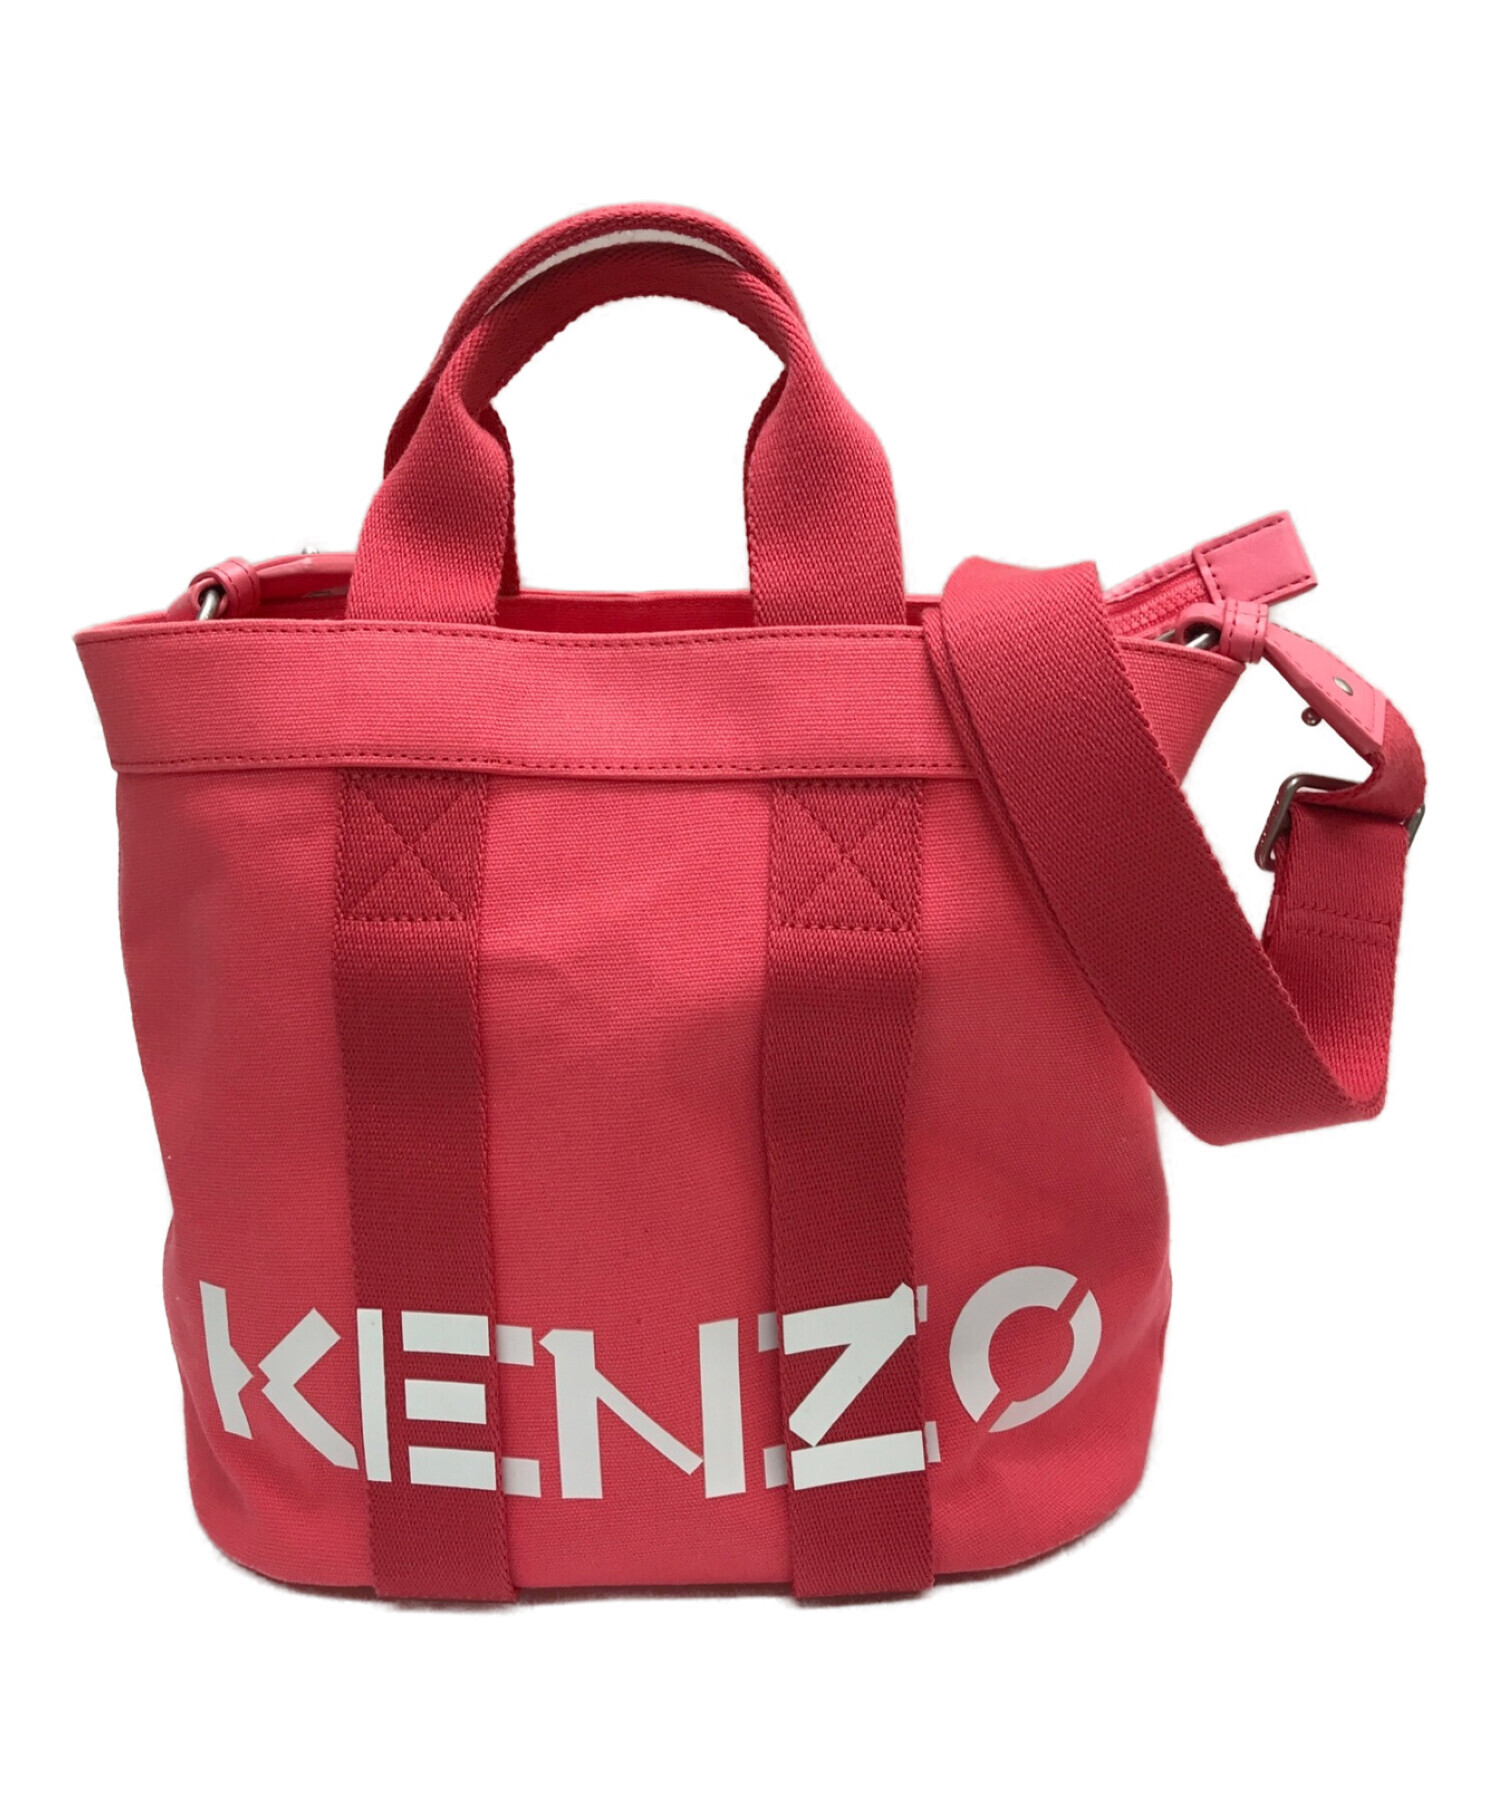 KENZO (ケンゾー) トートバッグ / ハンドバッグ / ショルダーバッグ / 2wayバッグ ピンク